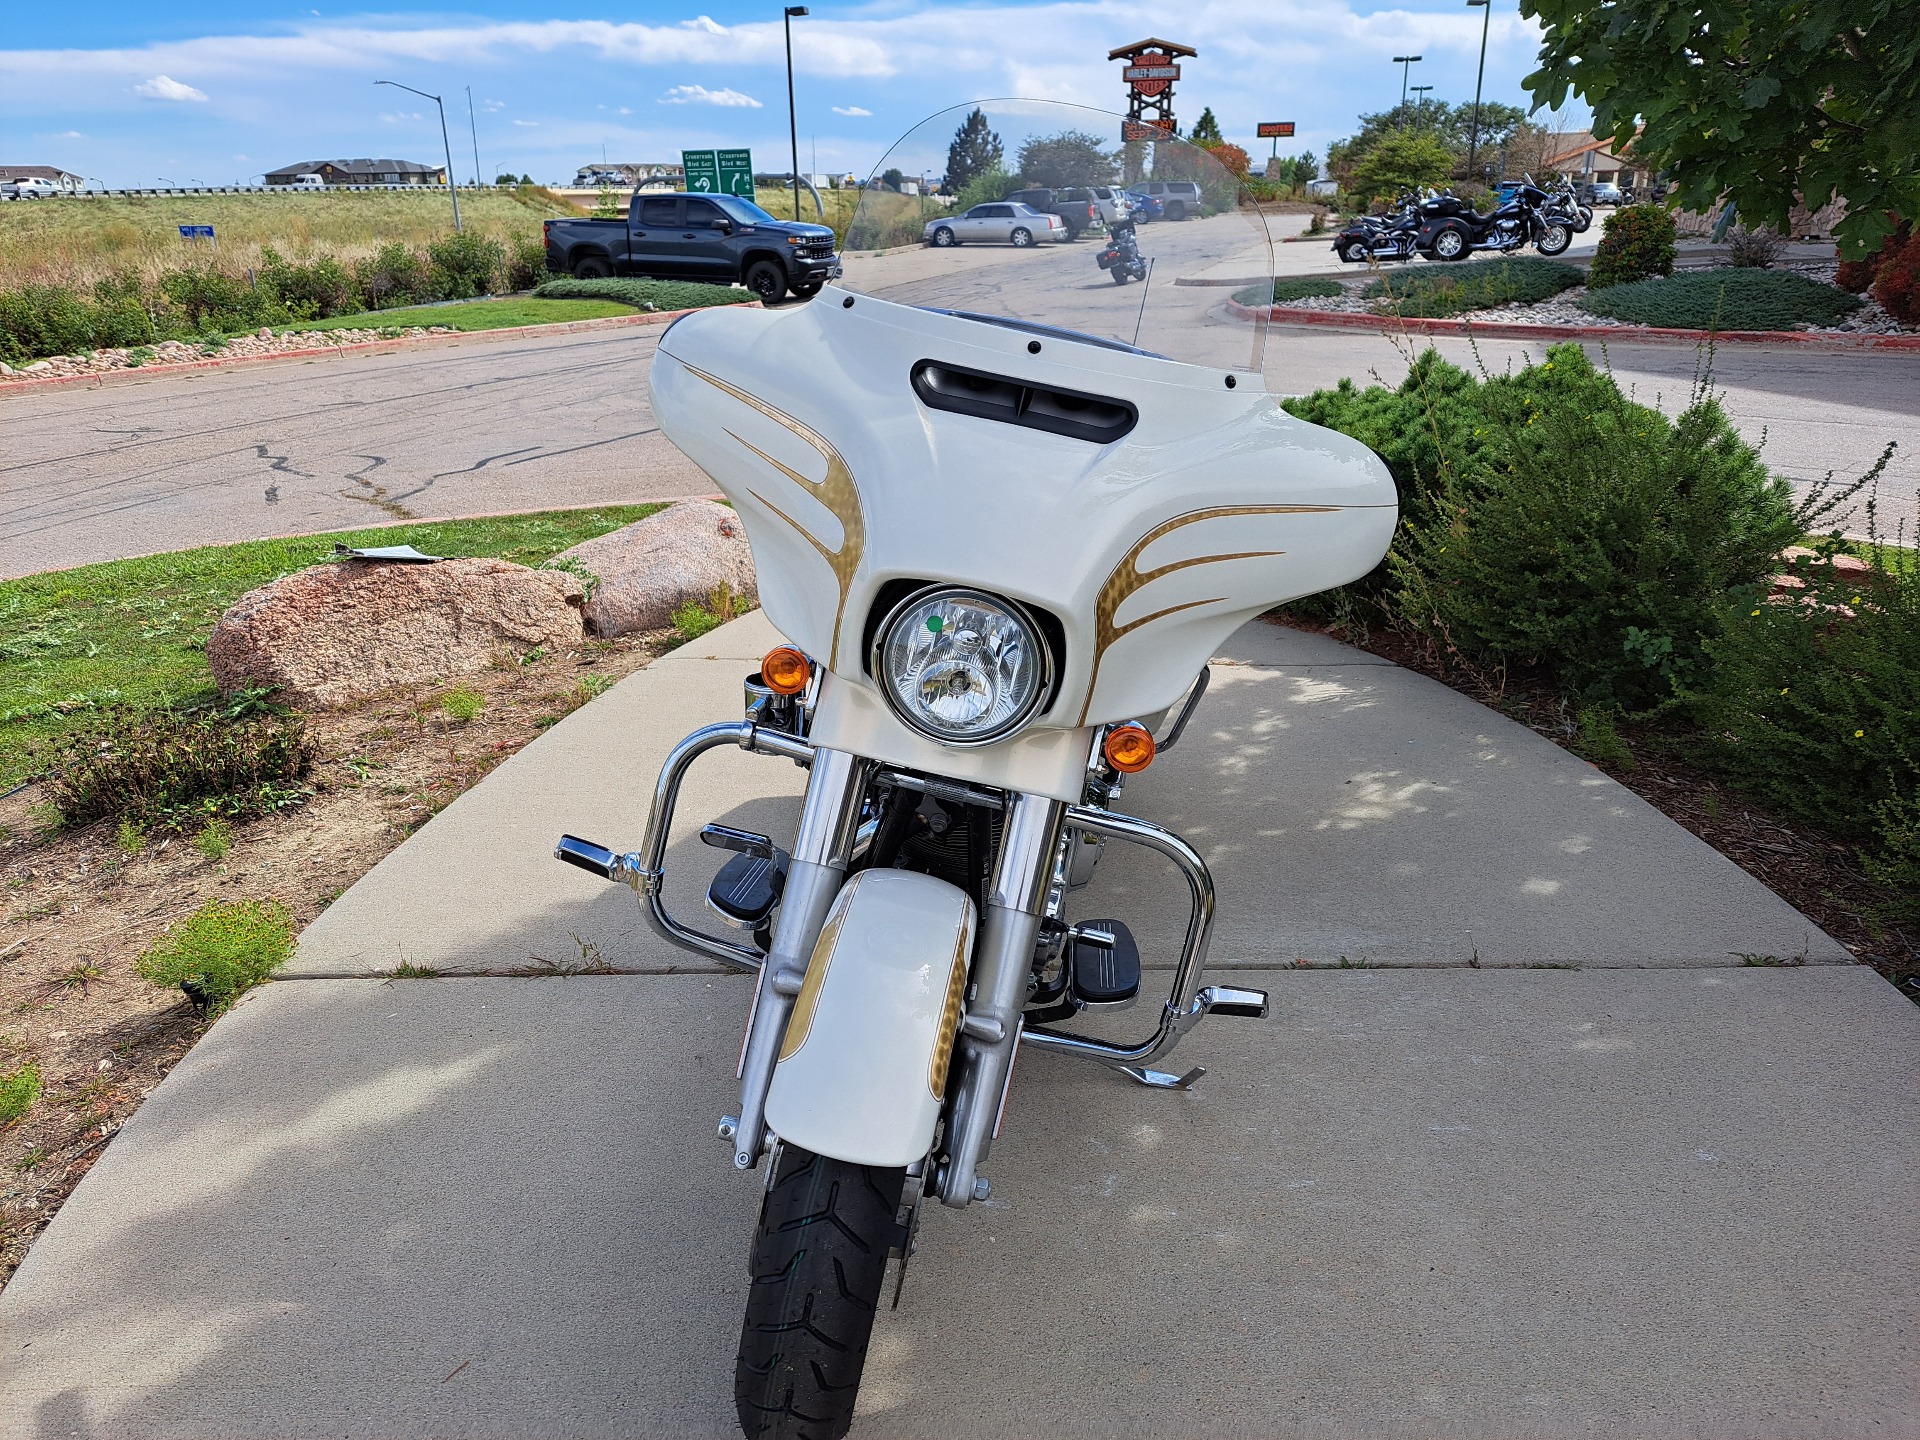 2015 Harley-Davidson Street Glide® Special in Loveland, Colorado - Photo 3